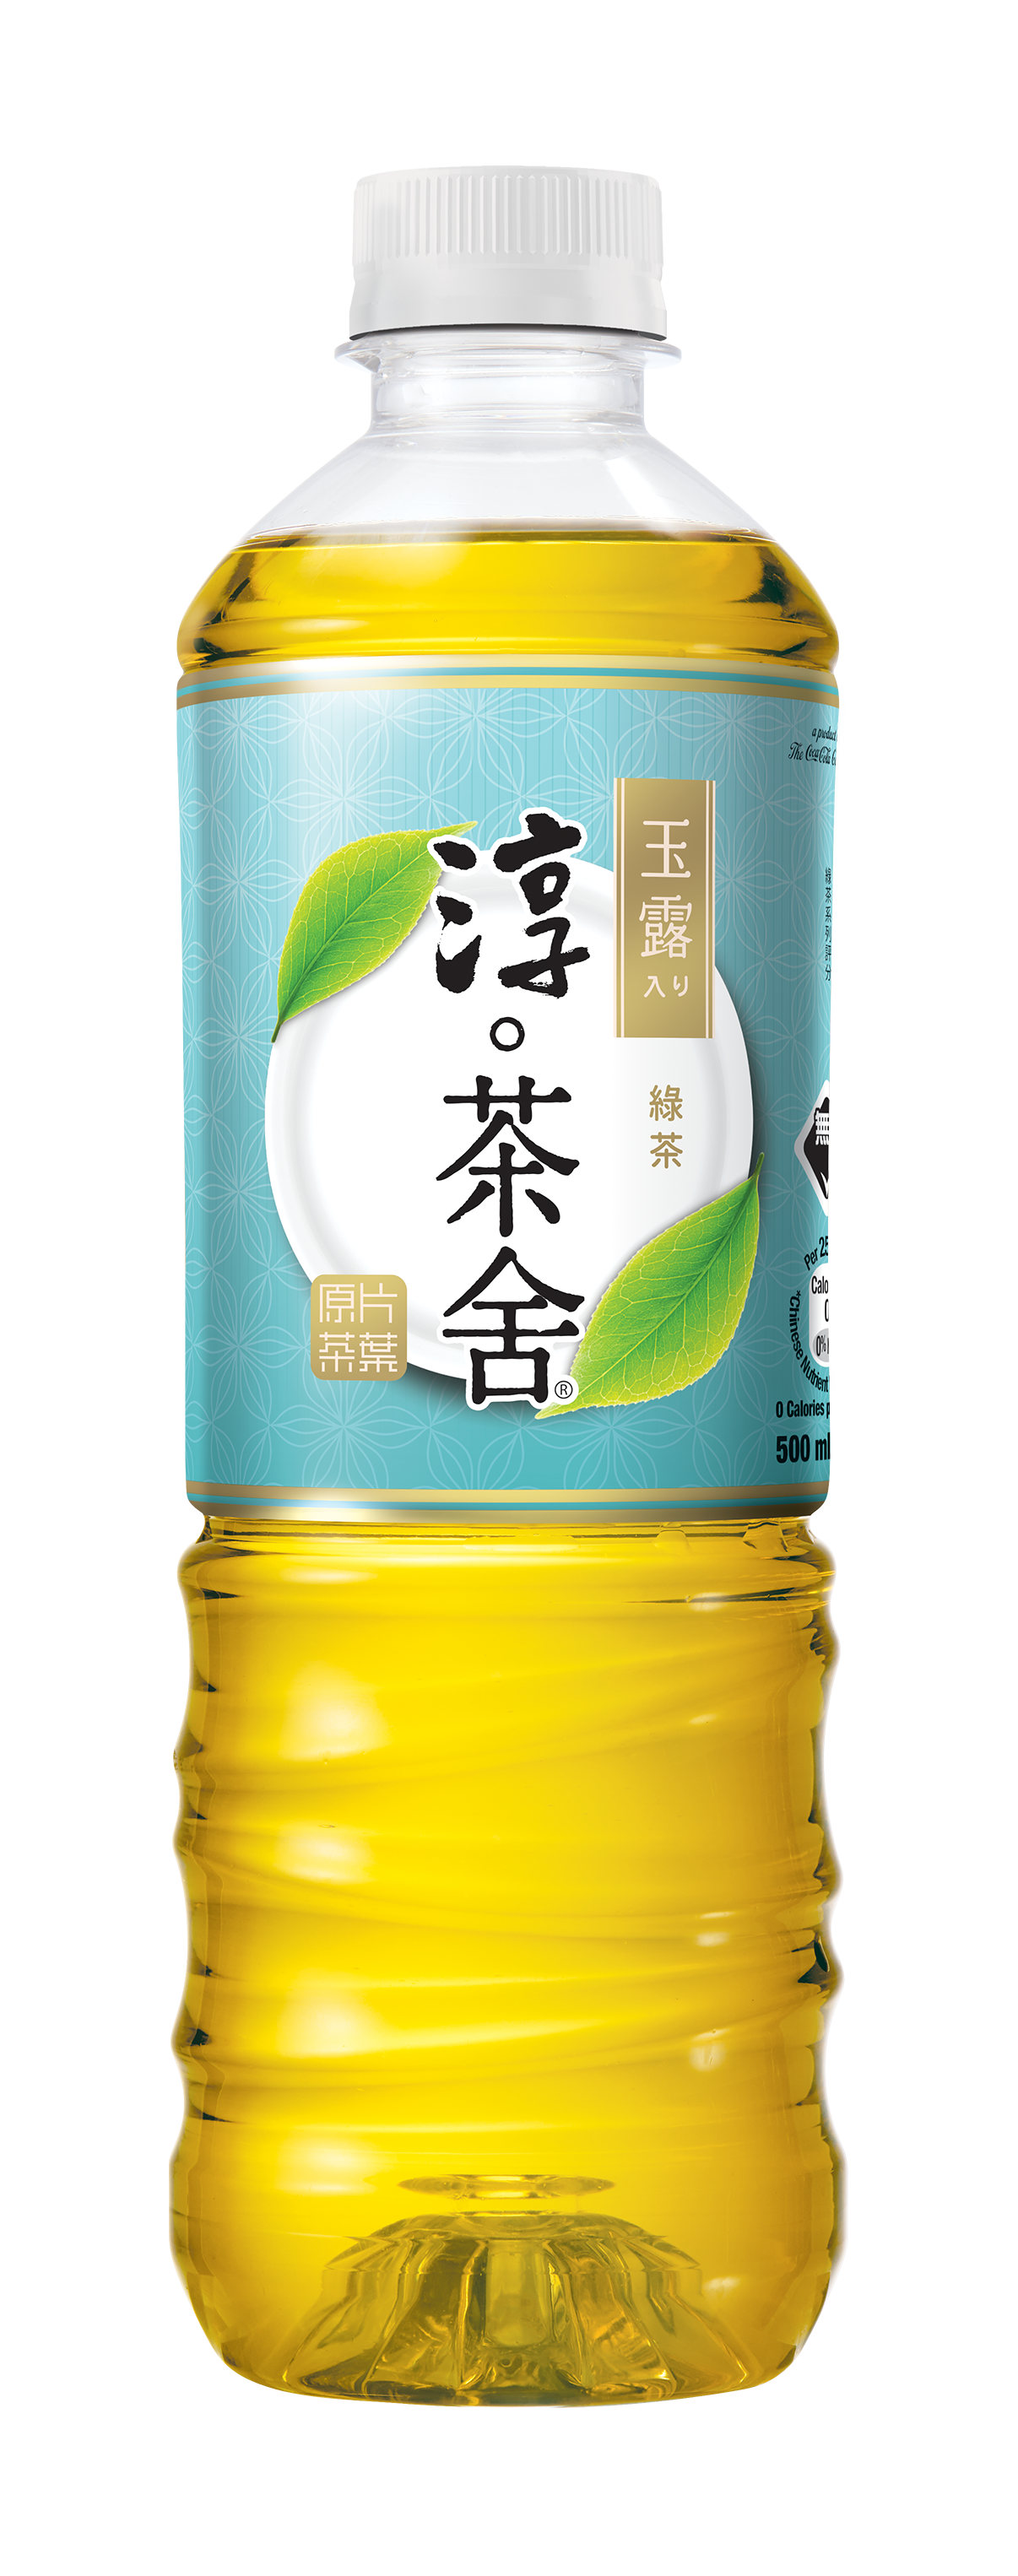 ATH Gyokuro Green Tea Beverage (No Sugar) bottle